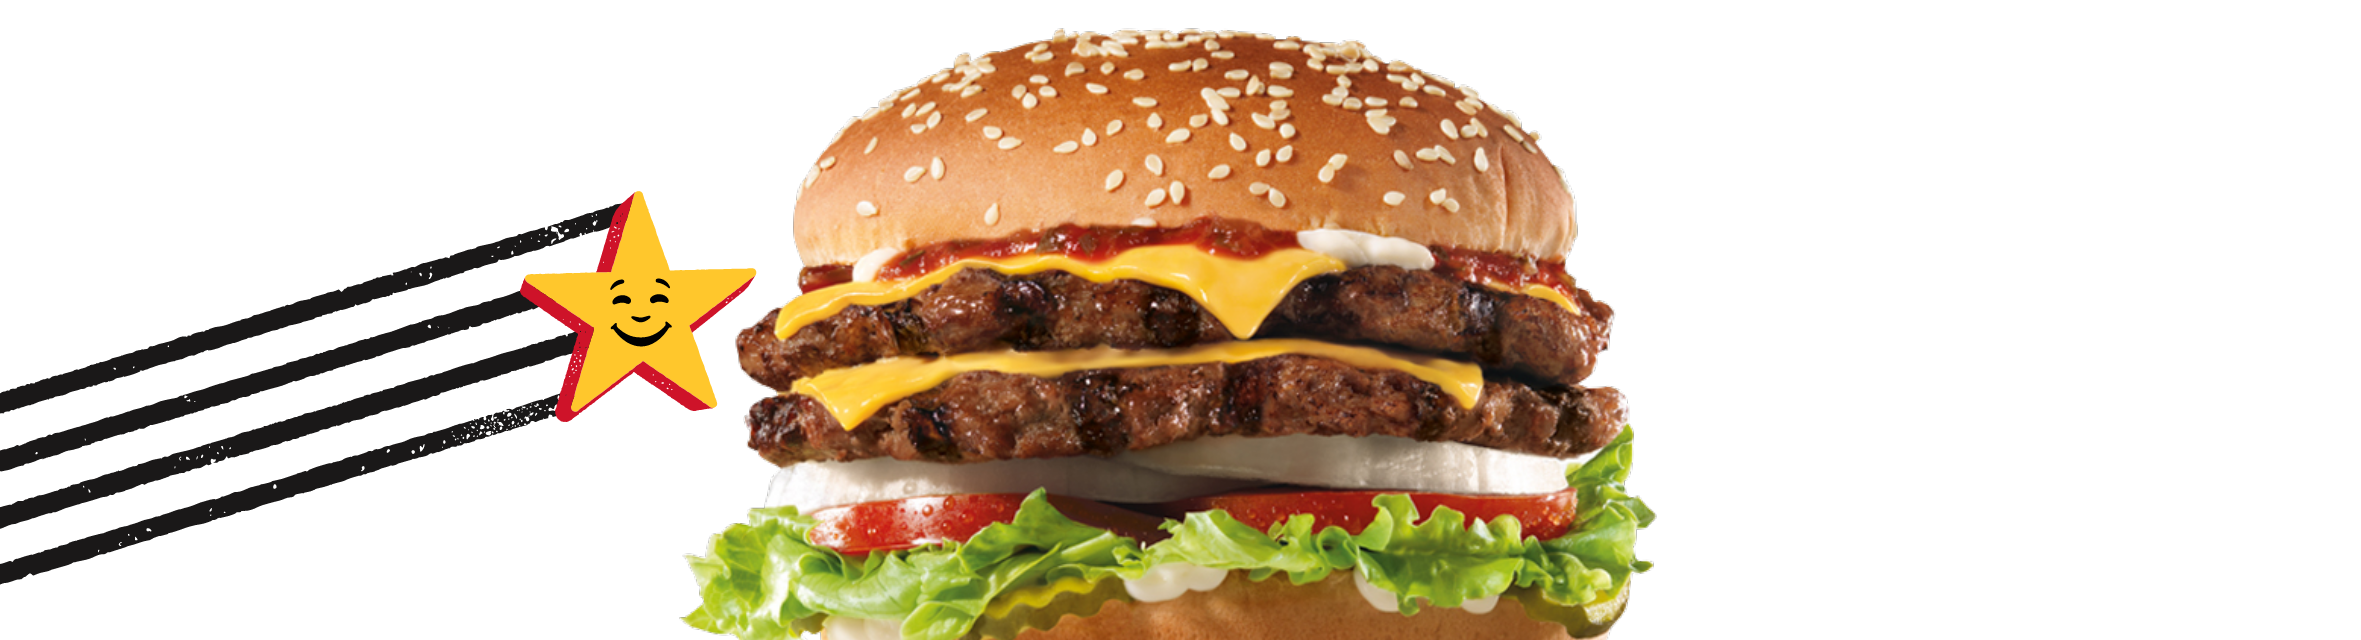 Carl's Jr. Cheeseburger Featuring the Happy Star Logo